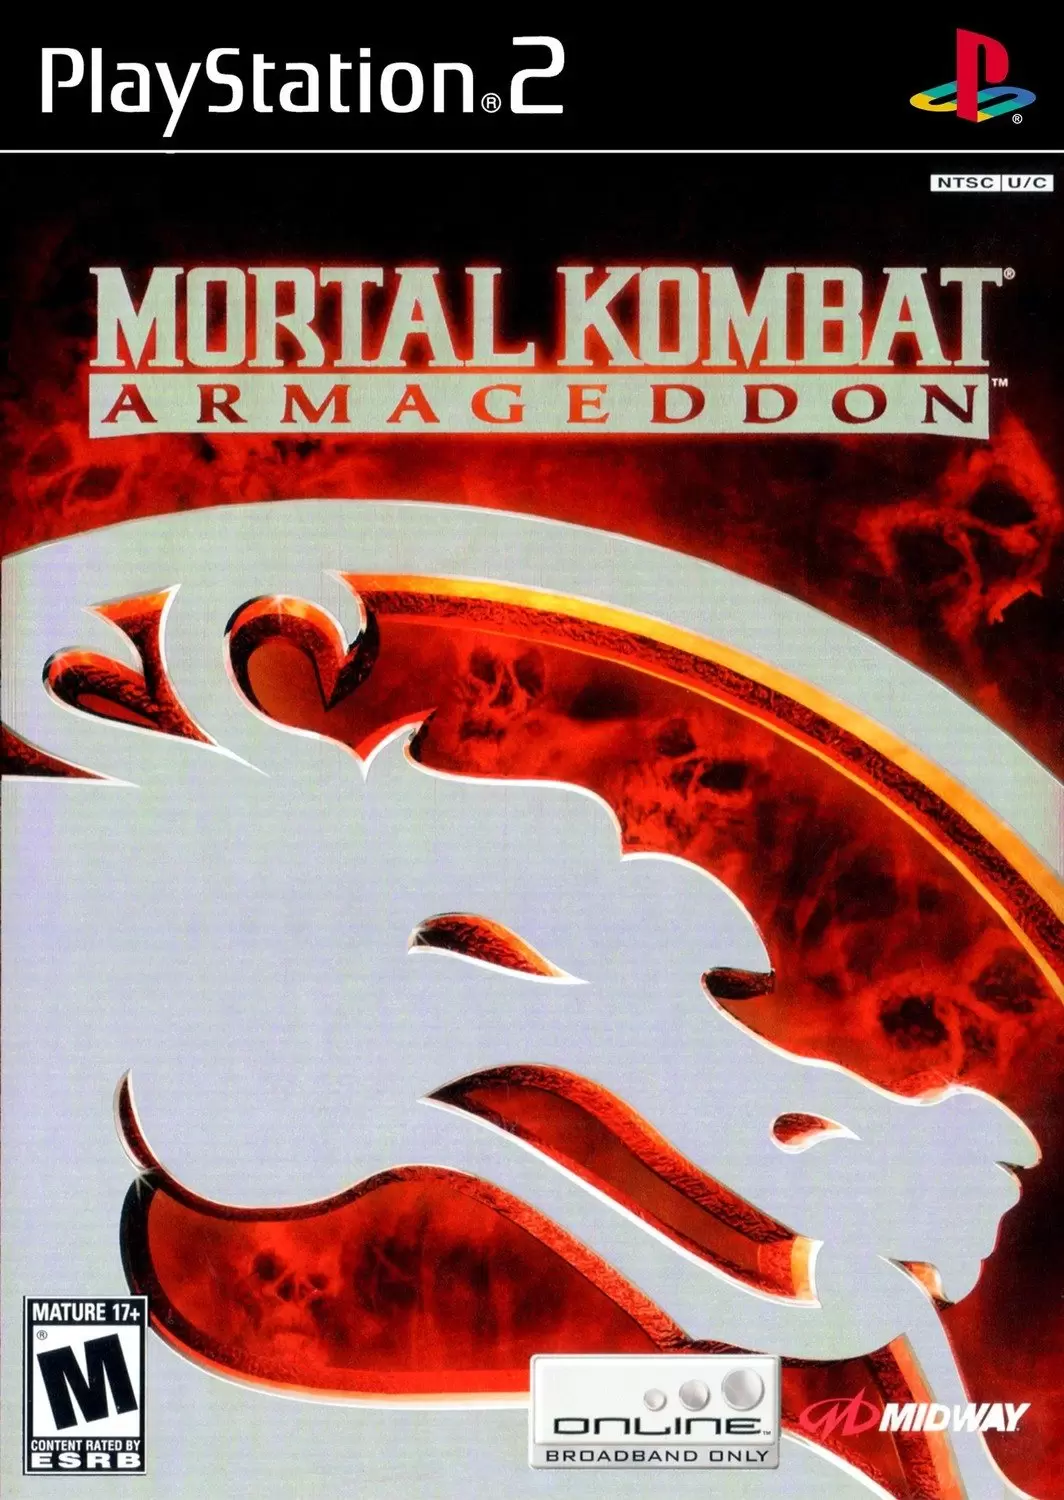 PS2 Games - Mortal Kombat: Armageddon